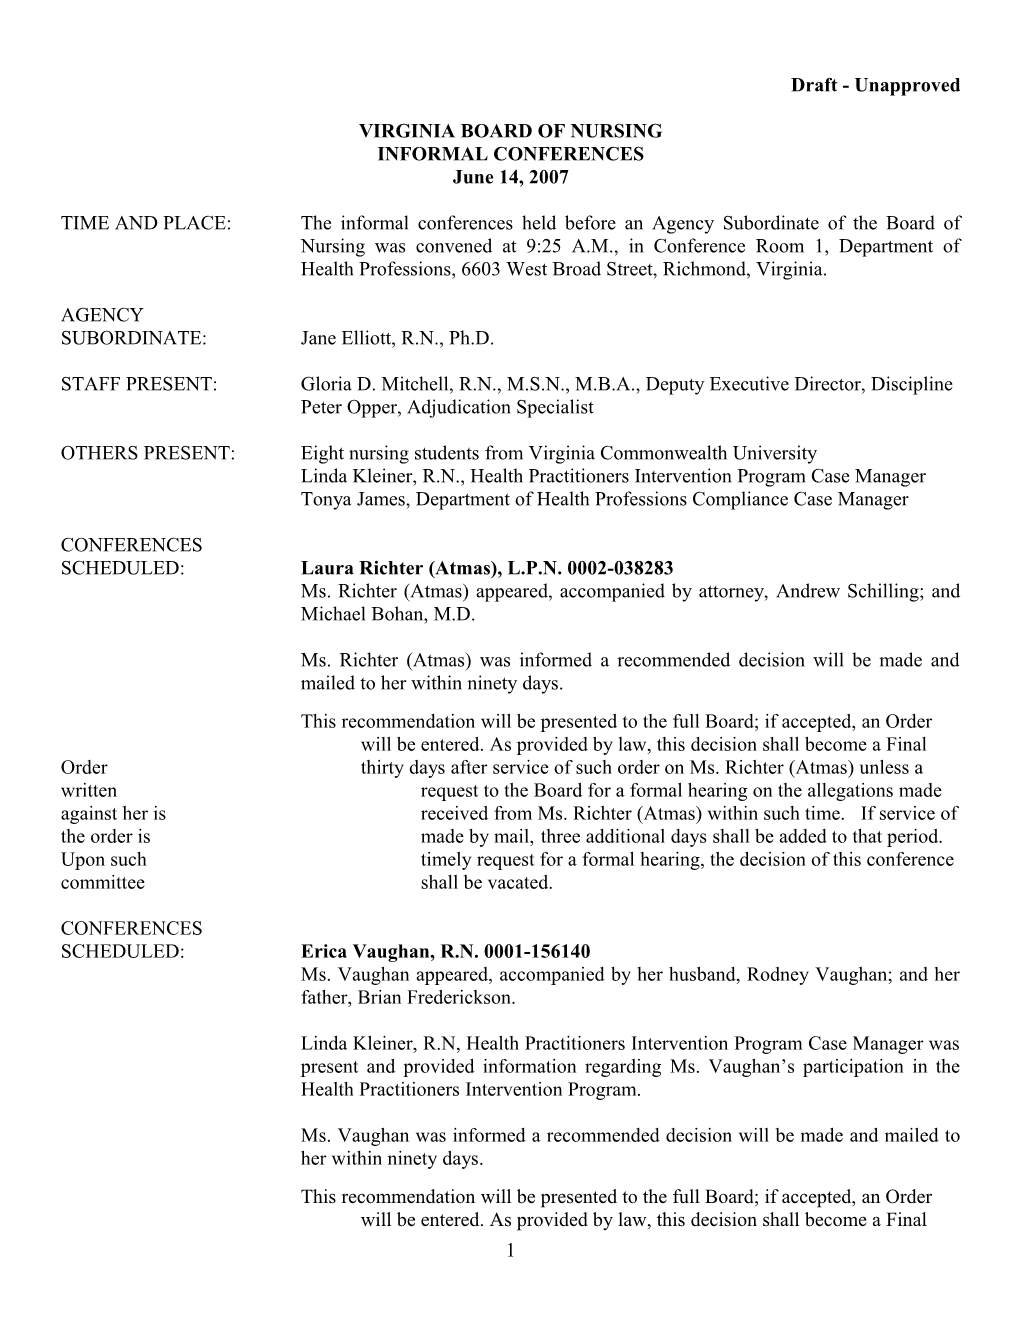 Nursing-Draft Minutes for IFC Held June 14, 2007